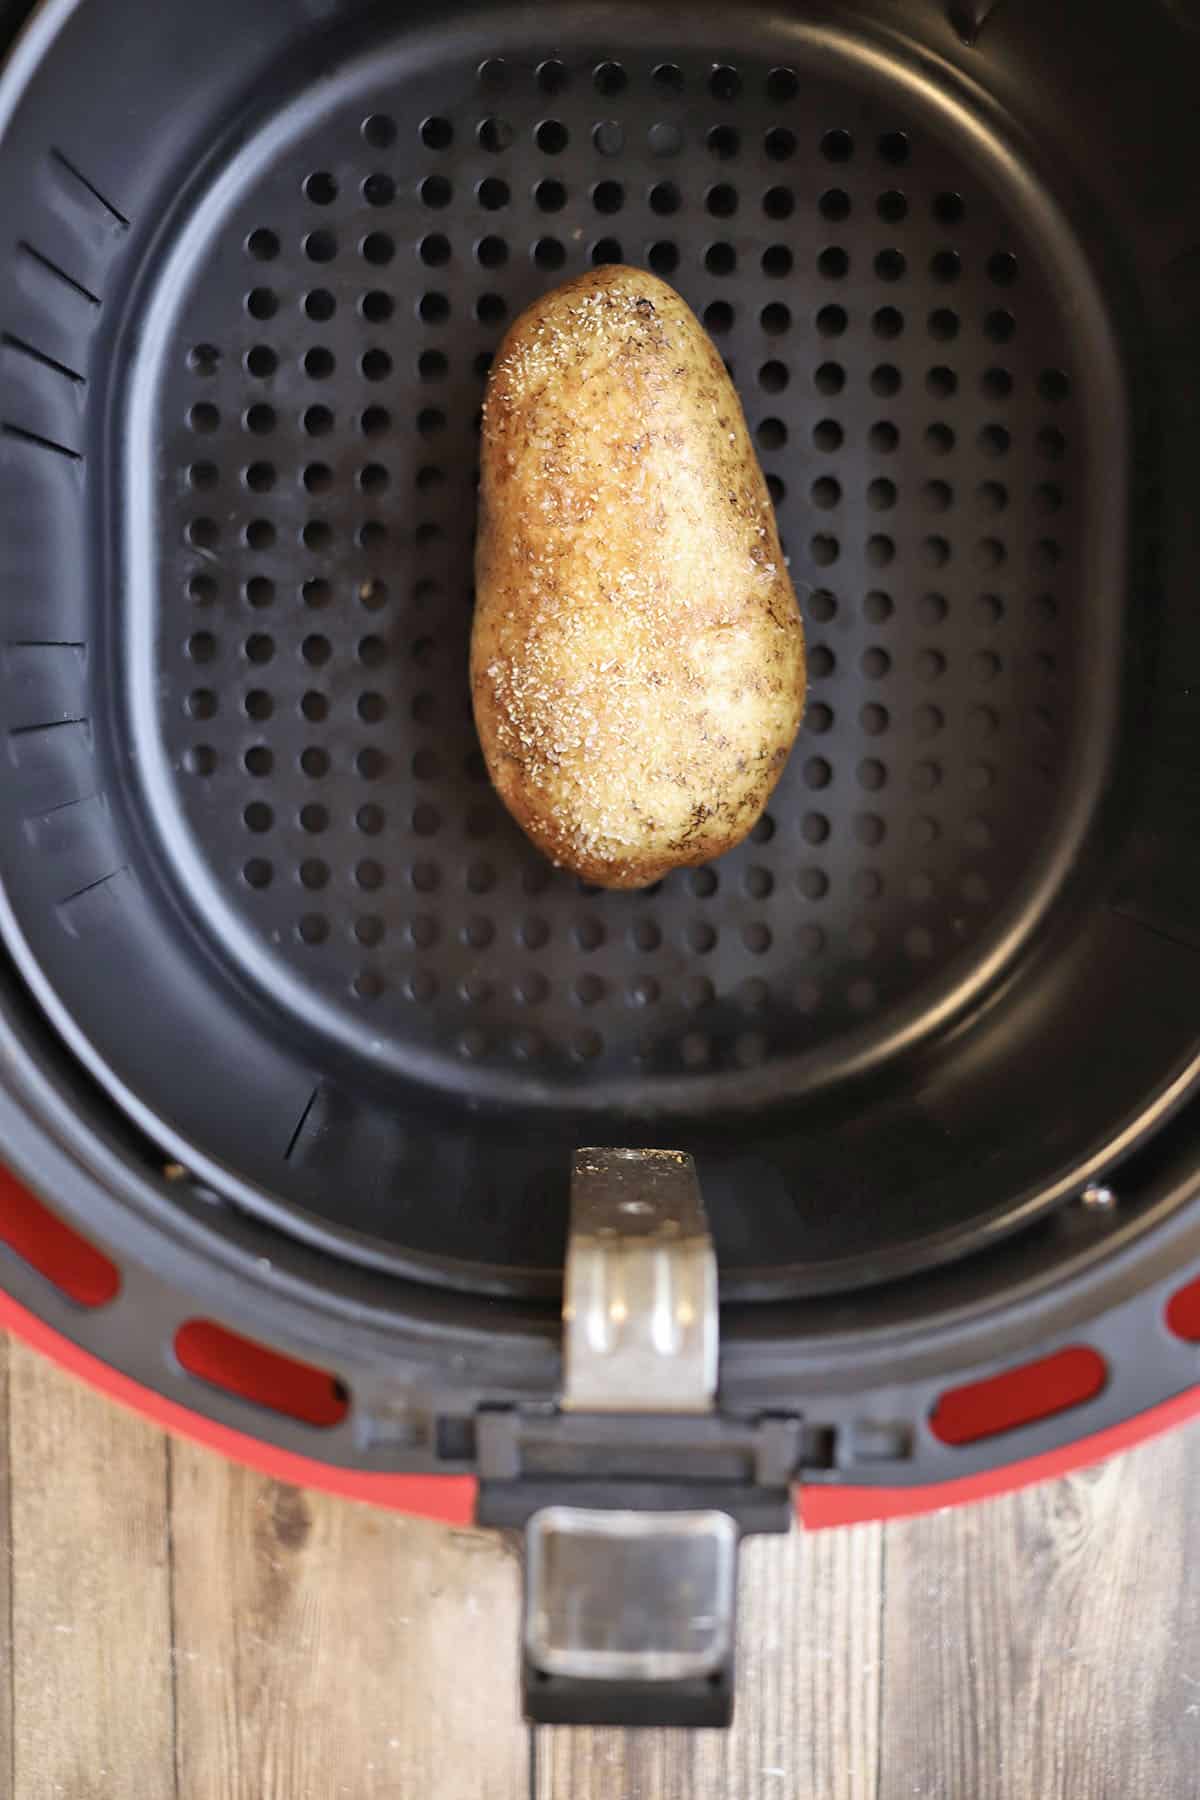 Russet potato in air fryer basket.